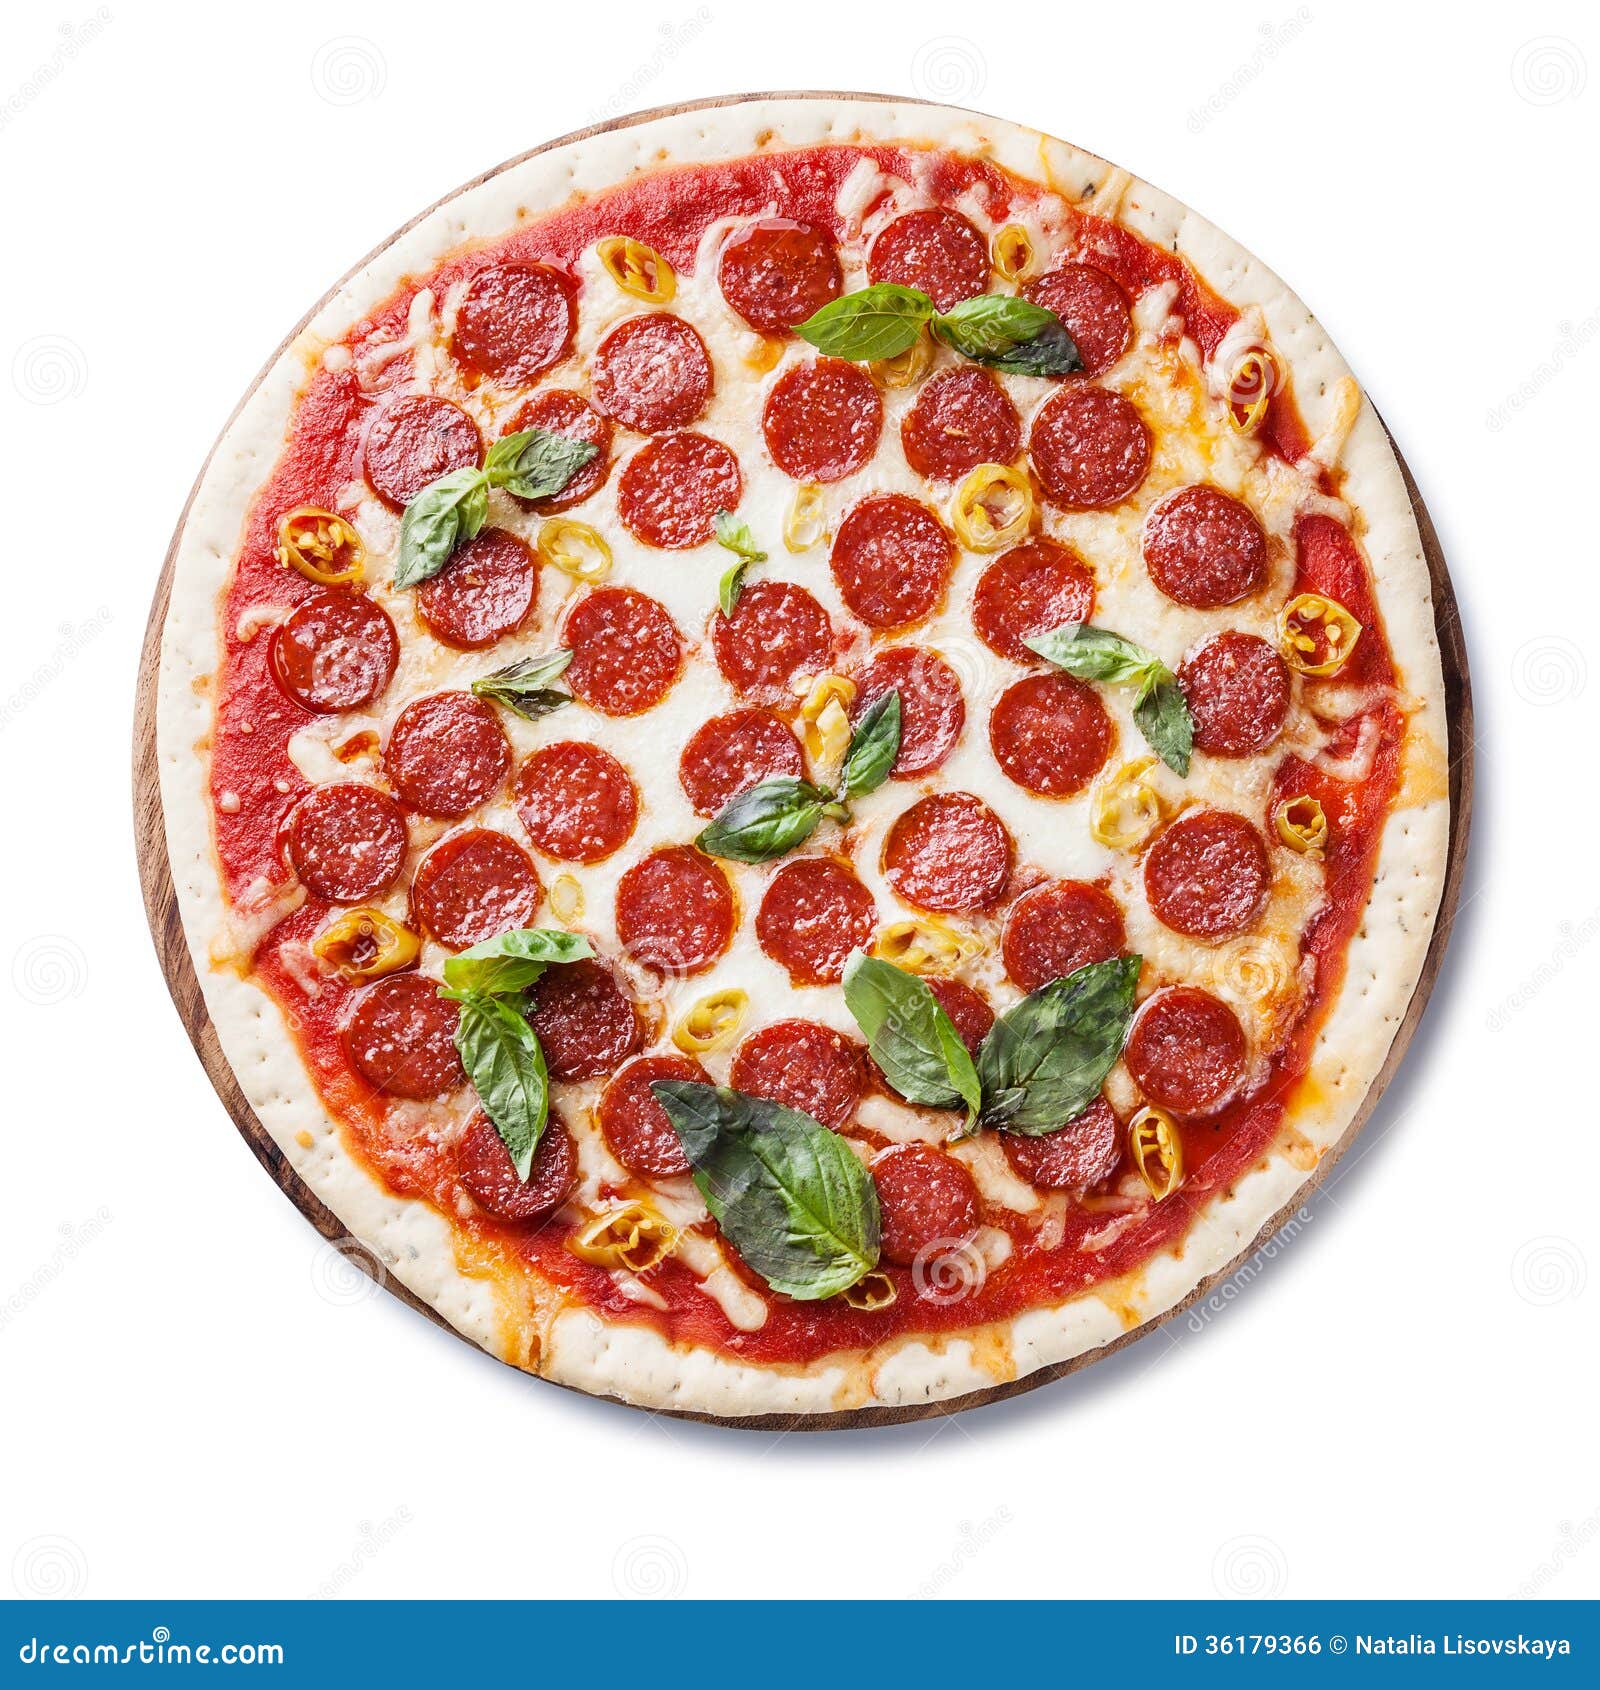 пицца фото на белом фоне пепперони фото 36